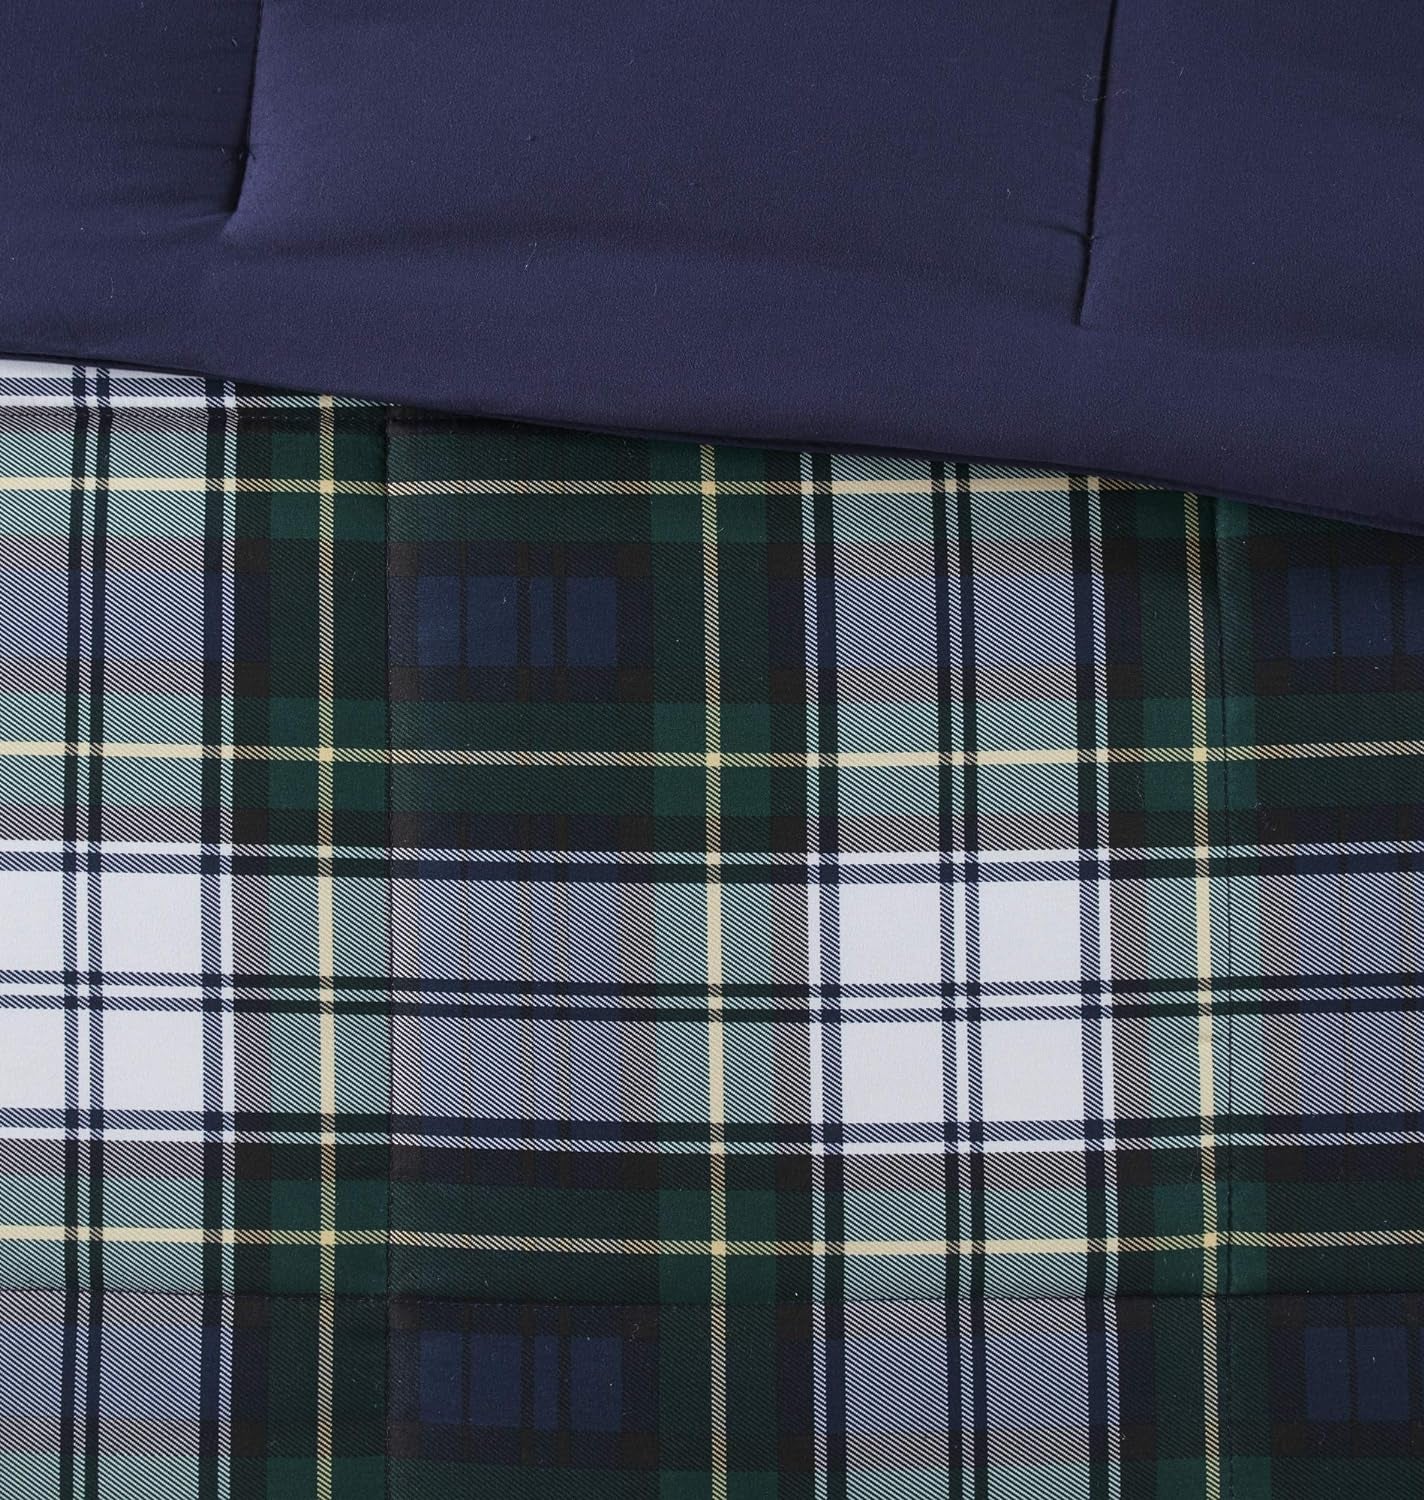 Essentials Parkston Plaid Comforter, Matching Sham, 3M Scotchguard Stain Release Cover, Hypoallergenic All Season Bedding-Set, Full/Queen, Navy, 3 Piece